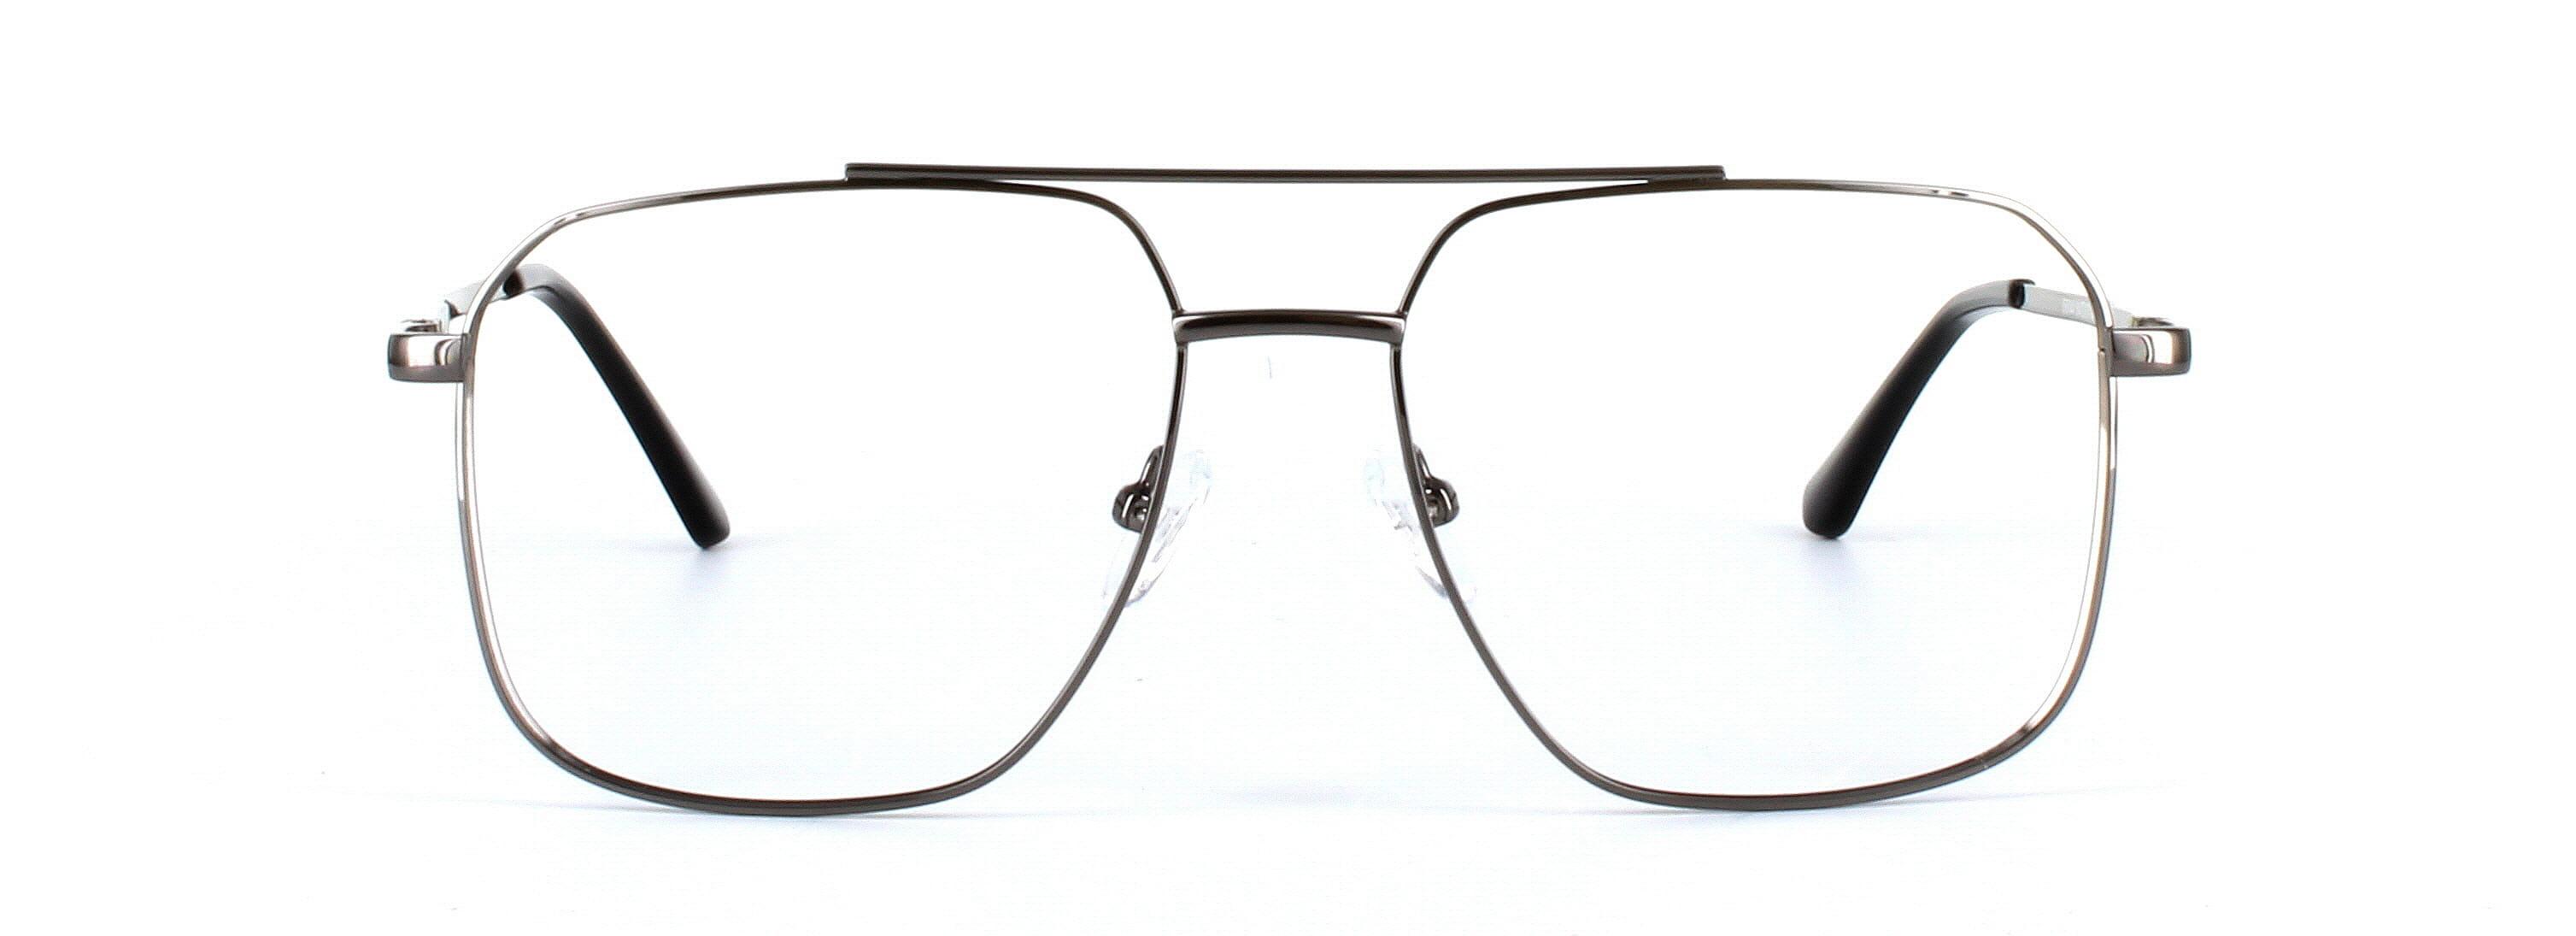 Caludon - Gunmetal aviator gents glasses - image 5